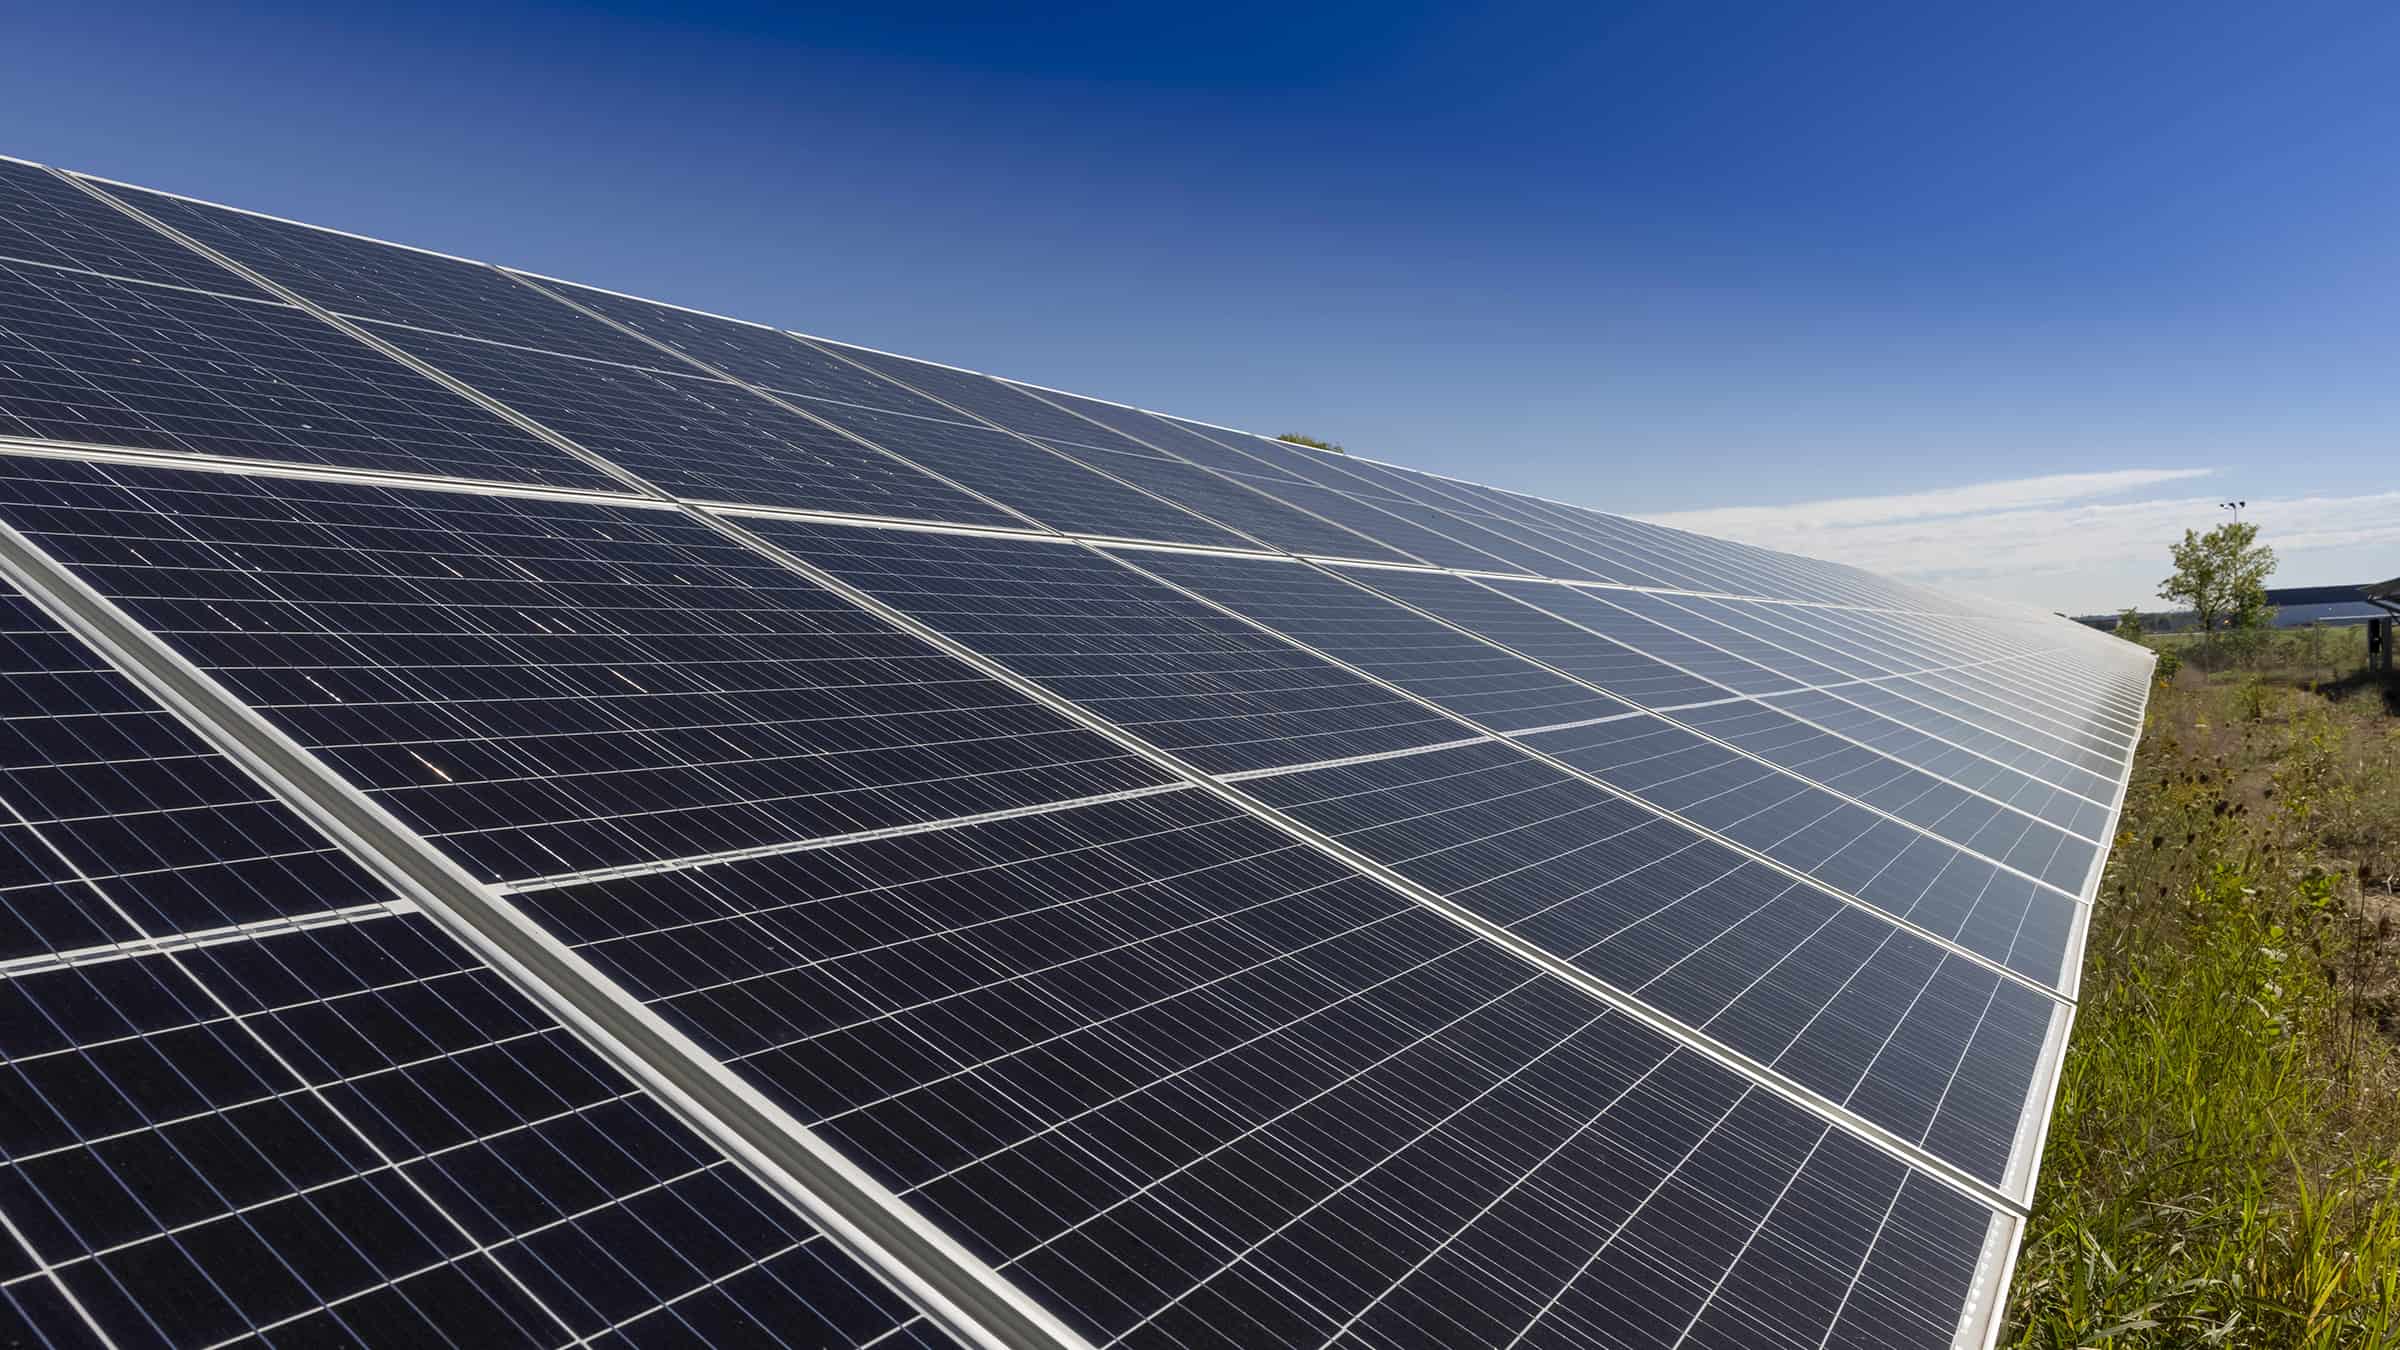 Sunvest Solar - Chaska Solar Array - Solar Panel in Sunlight